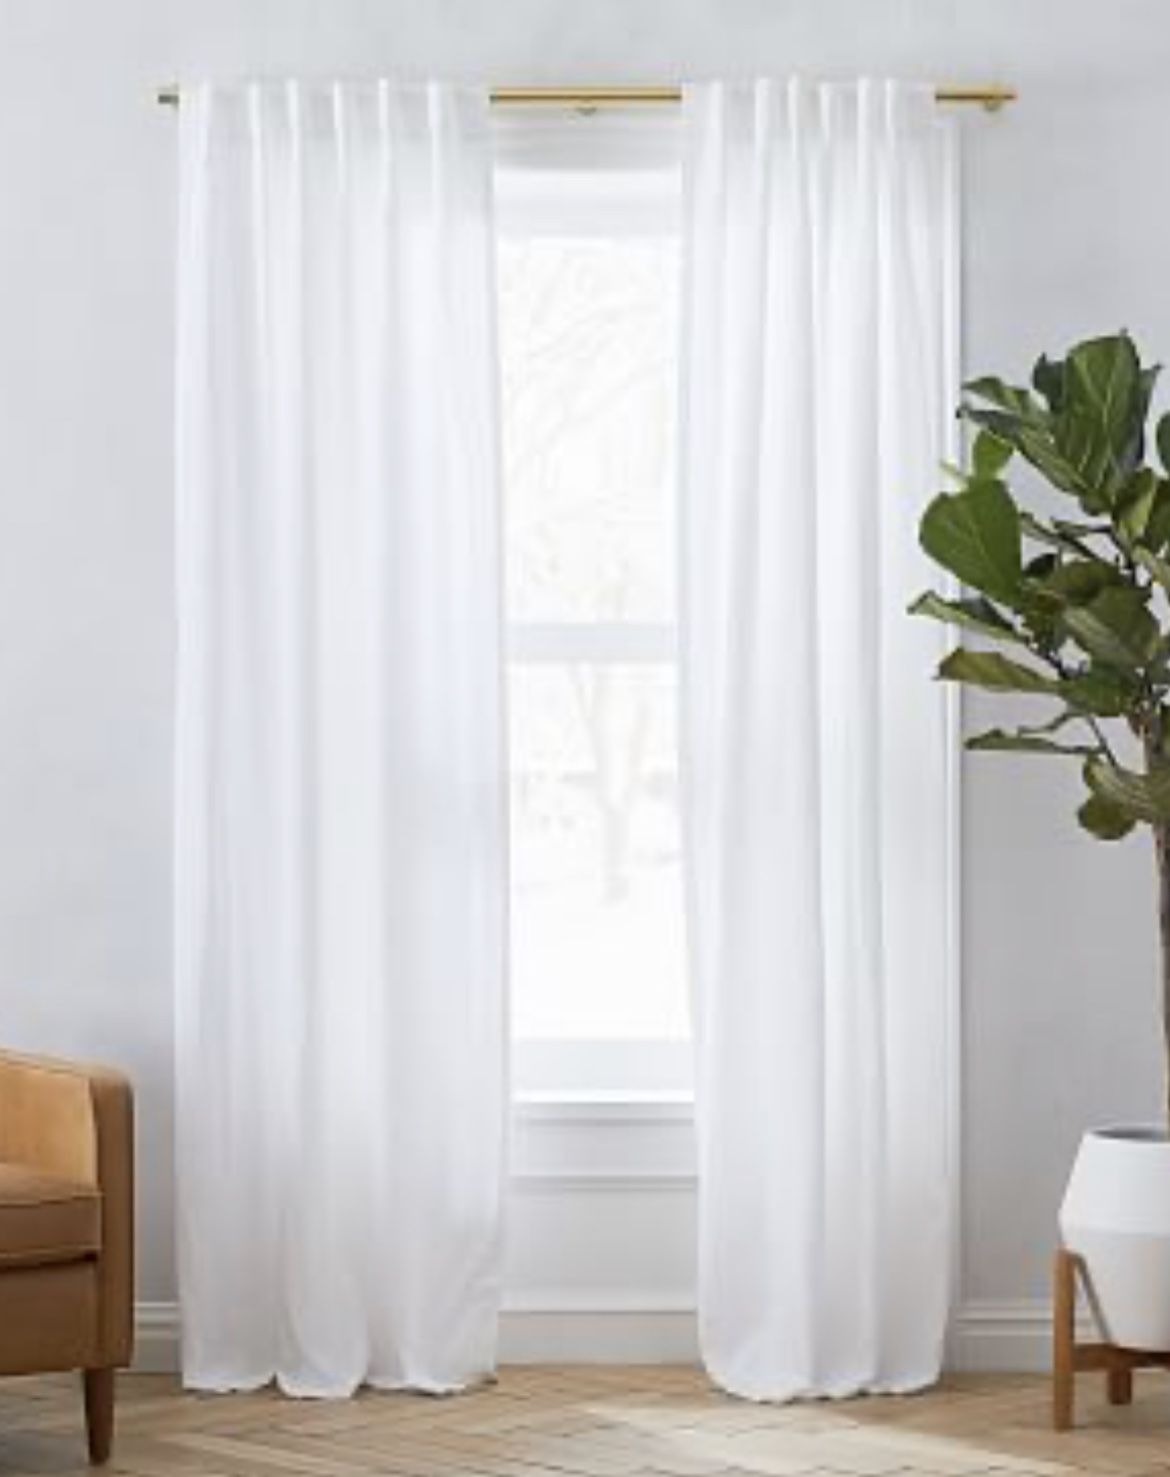 West Elm - 5 Panels Of White Linen Curtains 